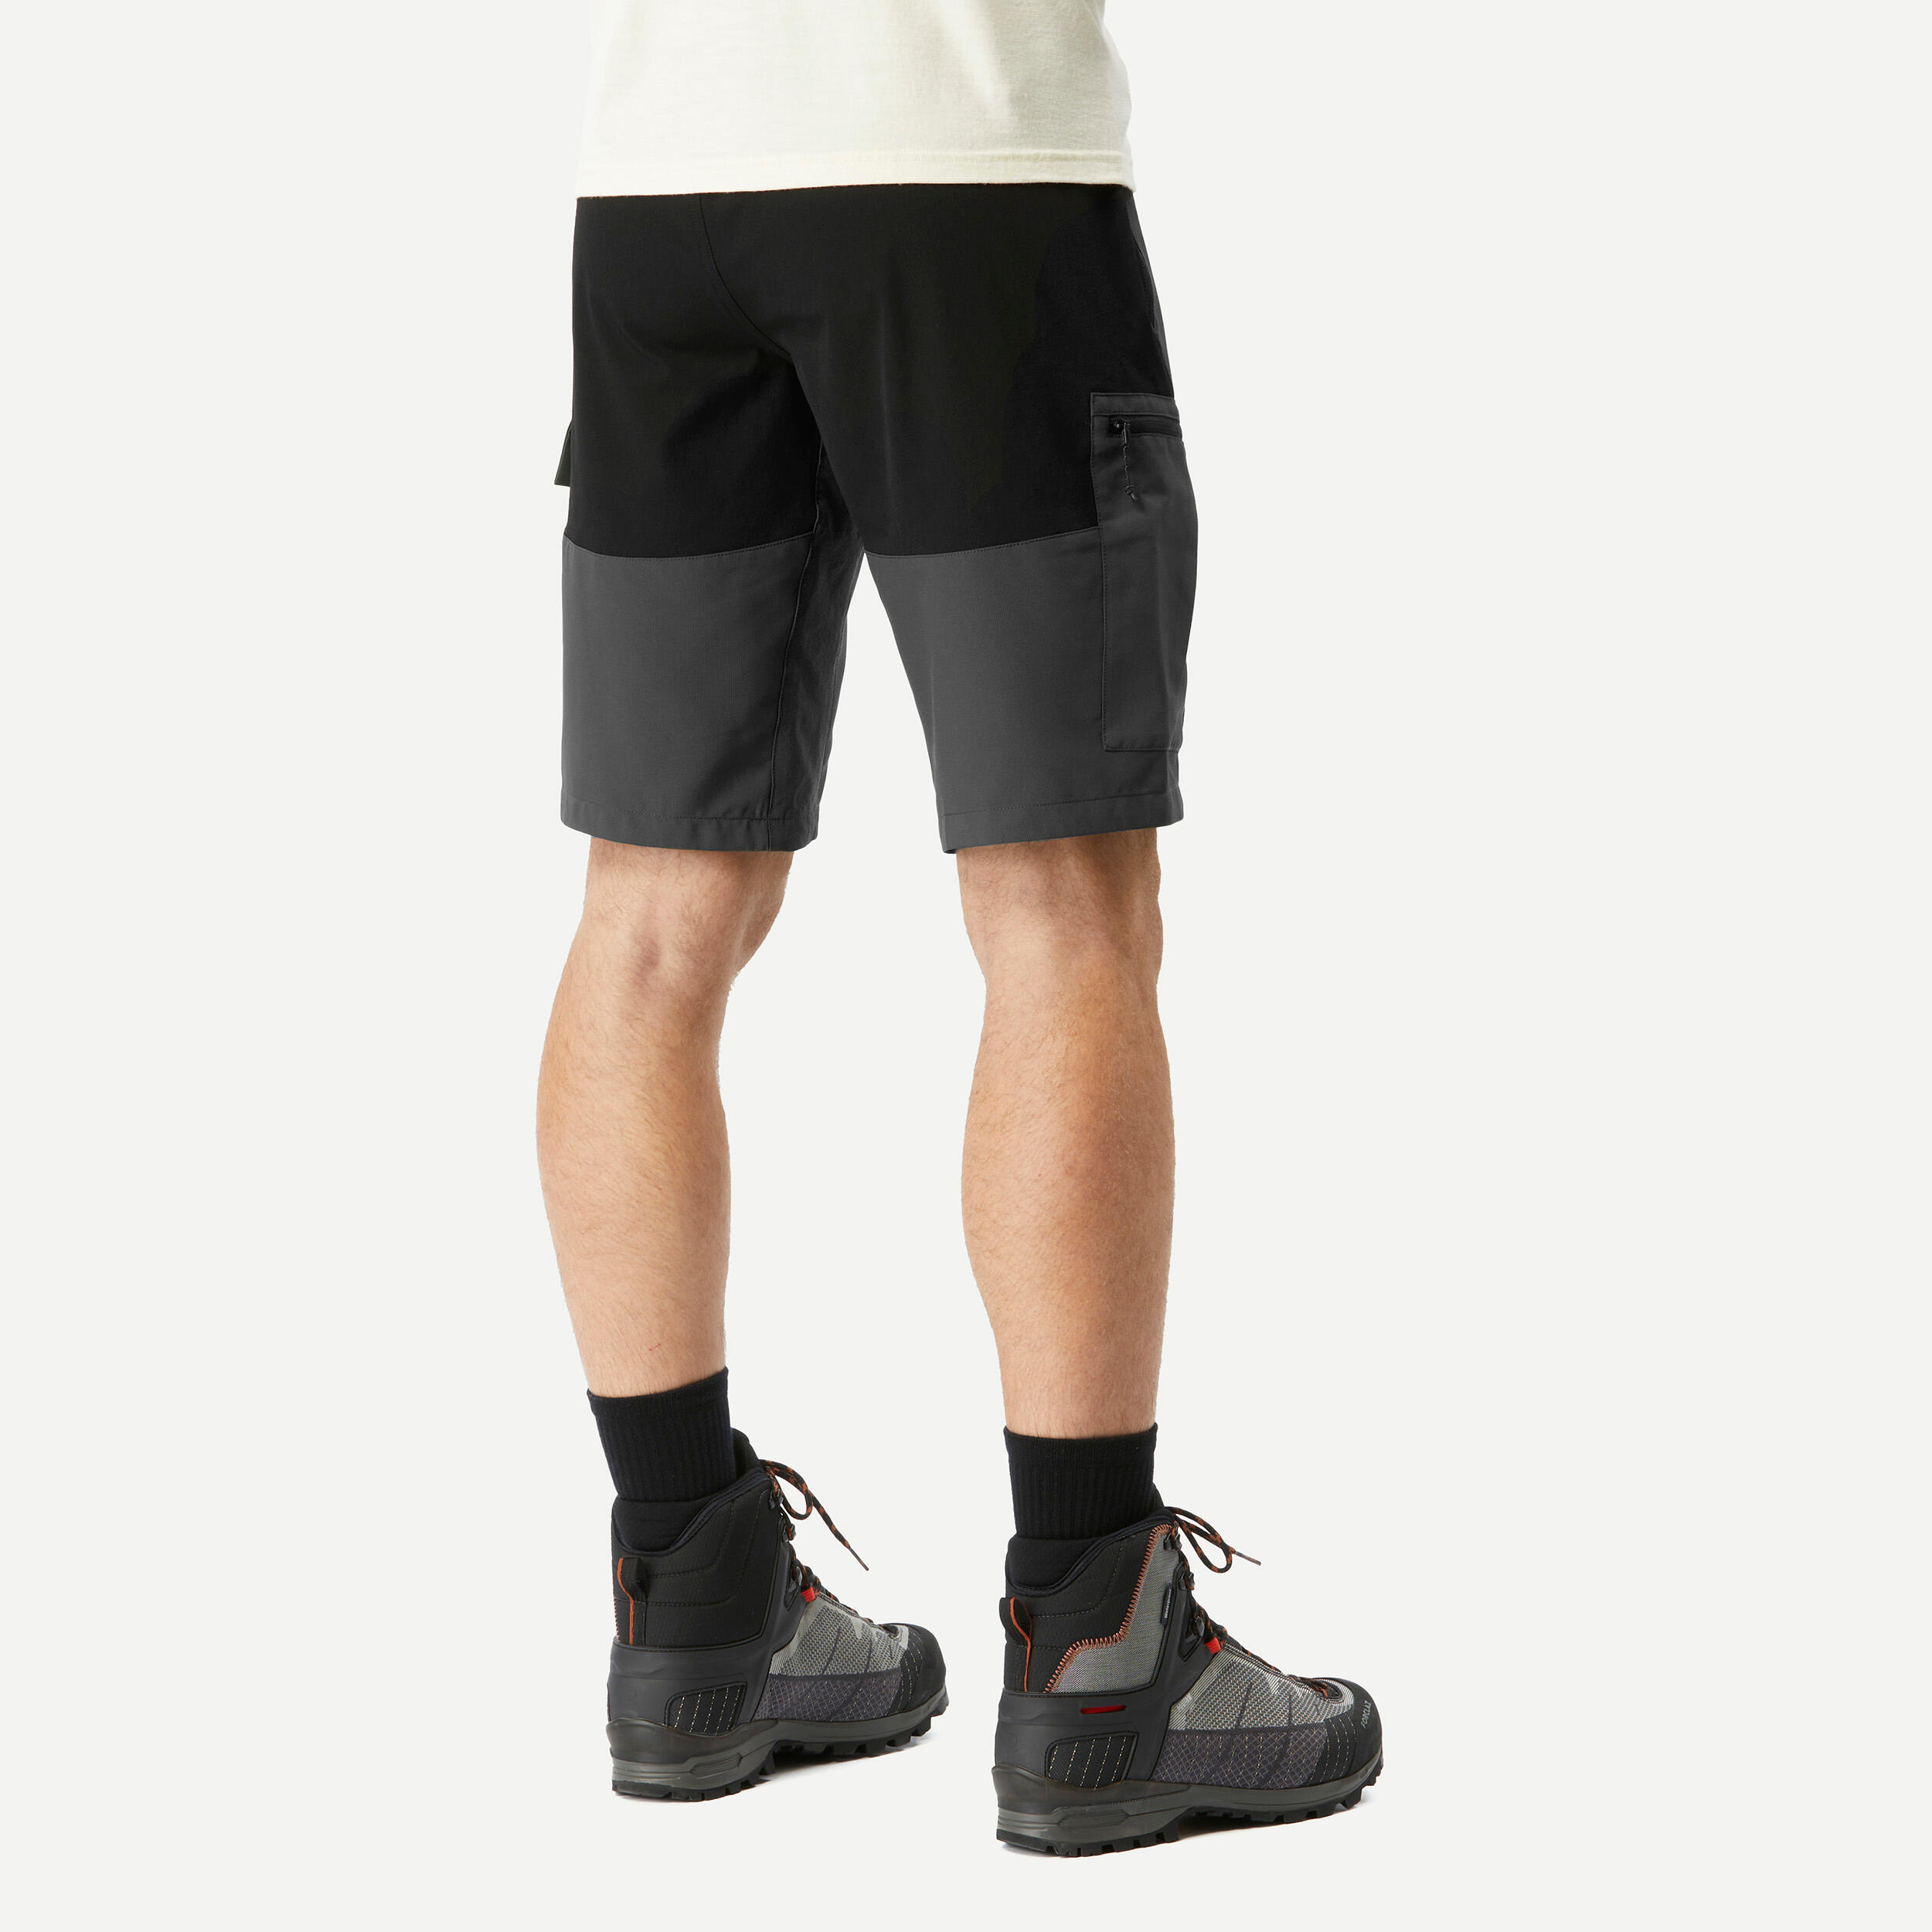 Men’s Hiking Shorts - MT 500